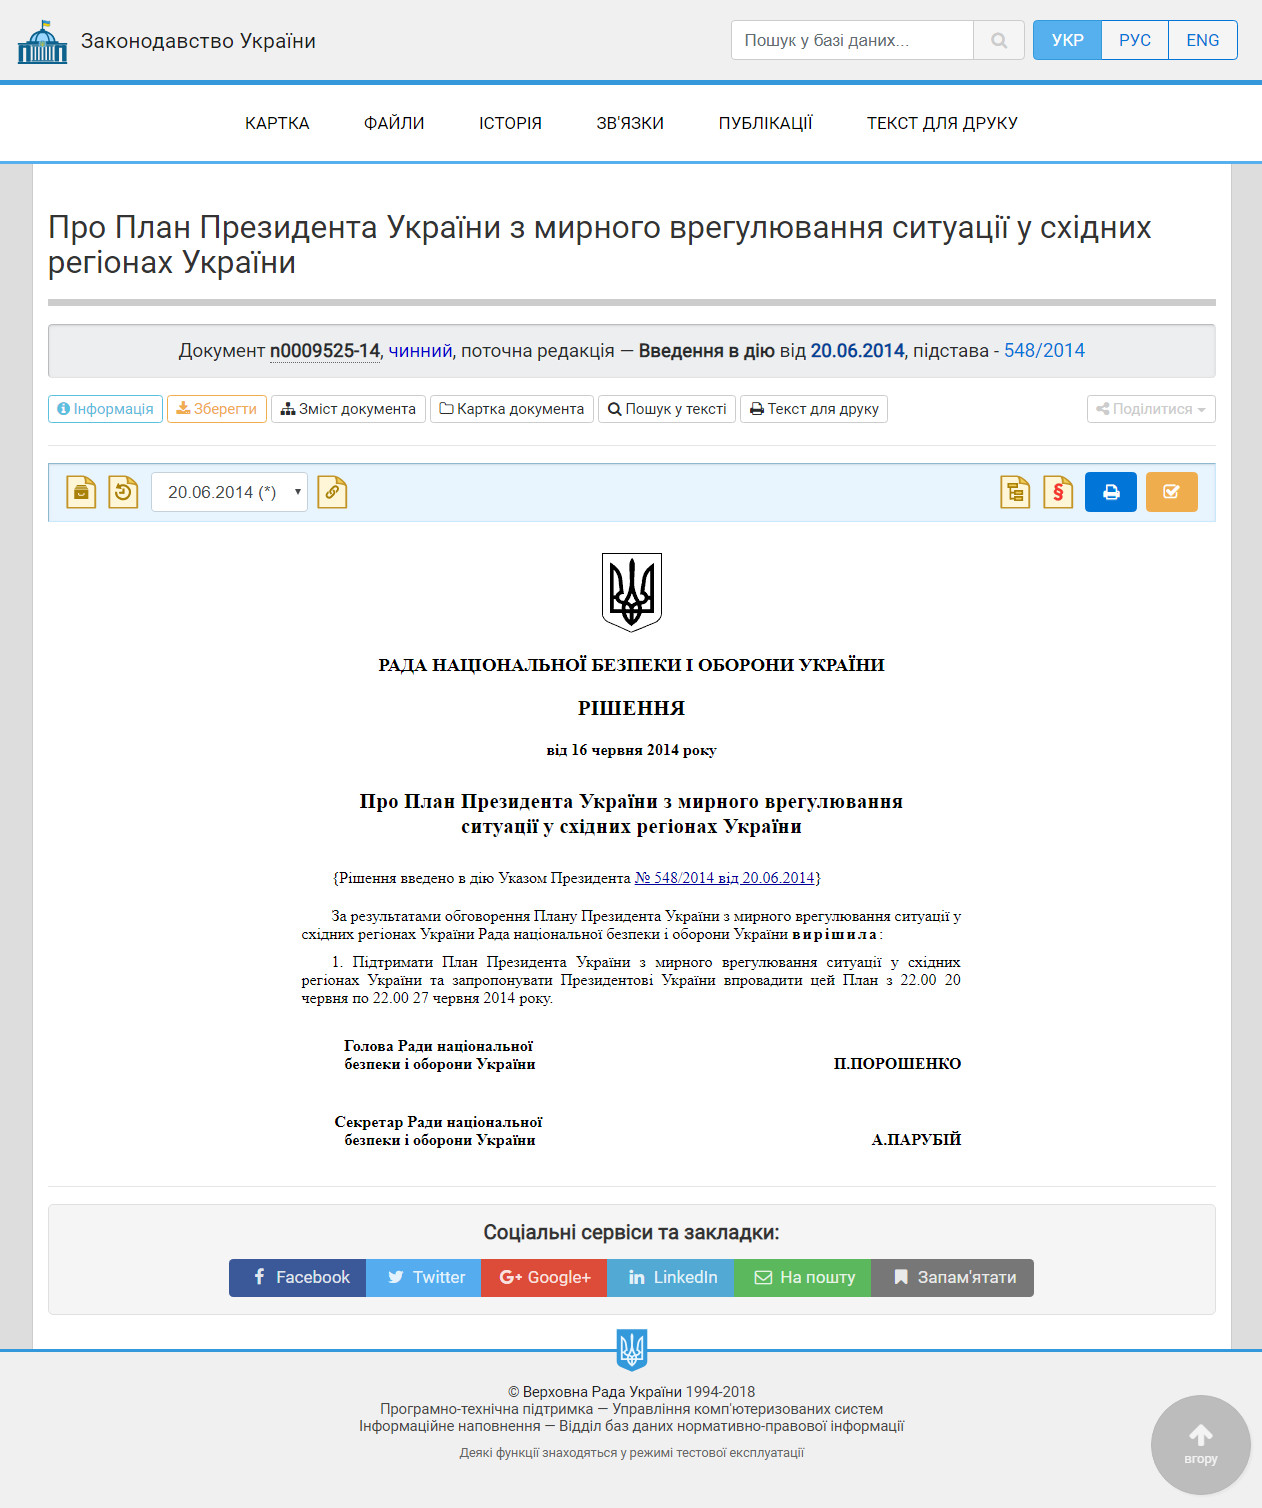 http://zakon.rada.gov.ua/laws/show/n0009525-14